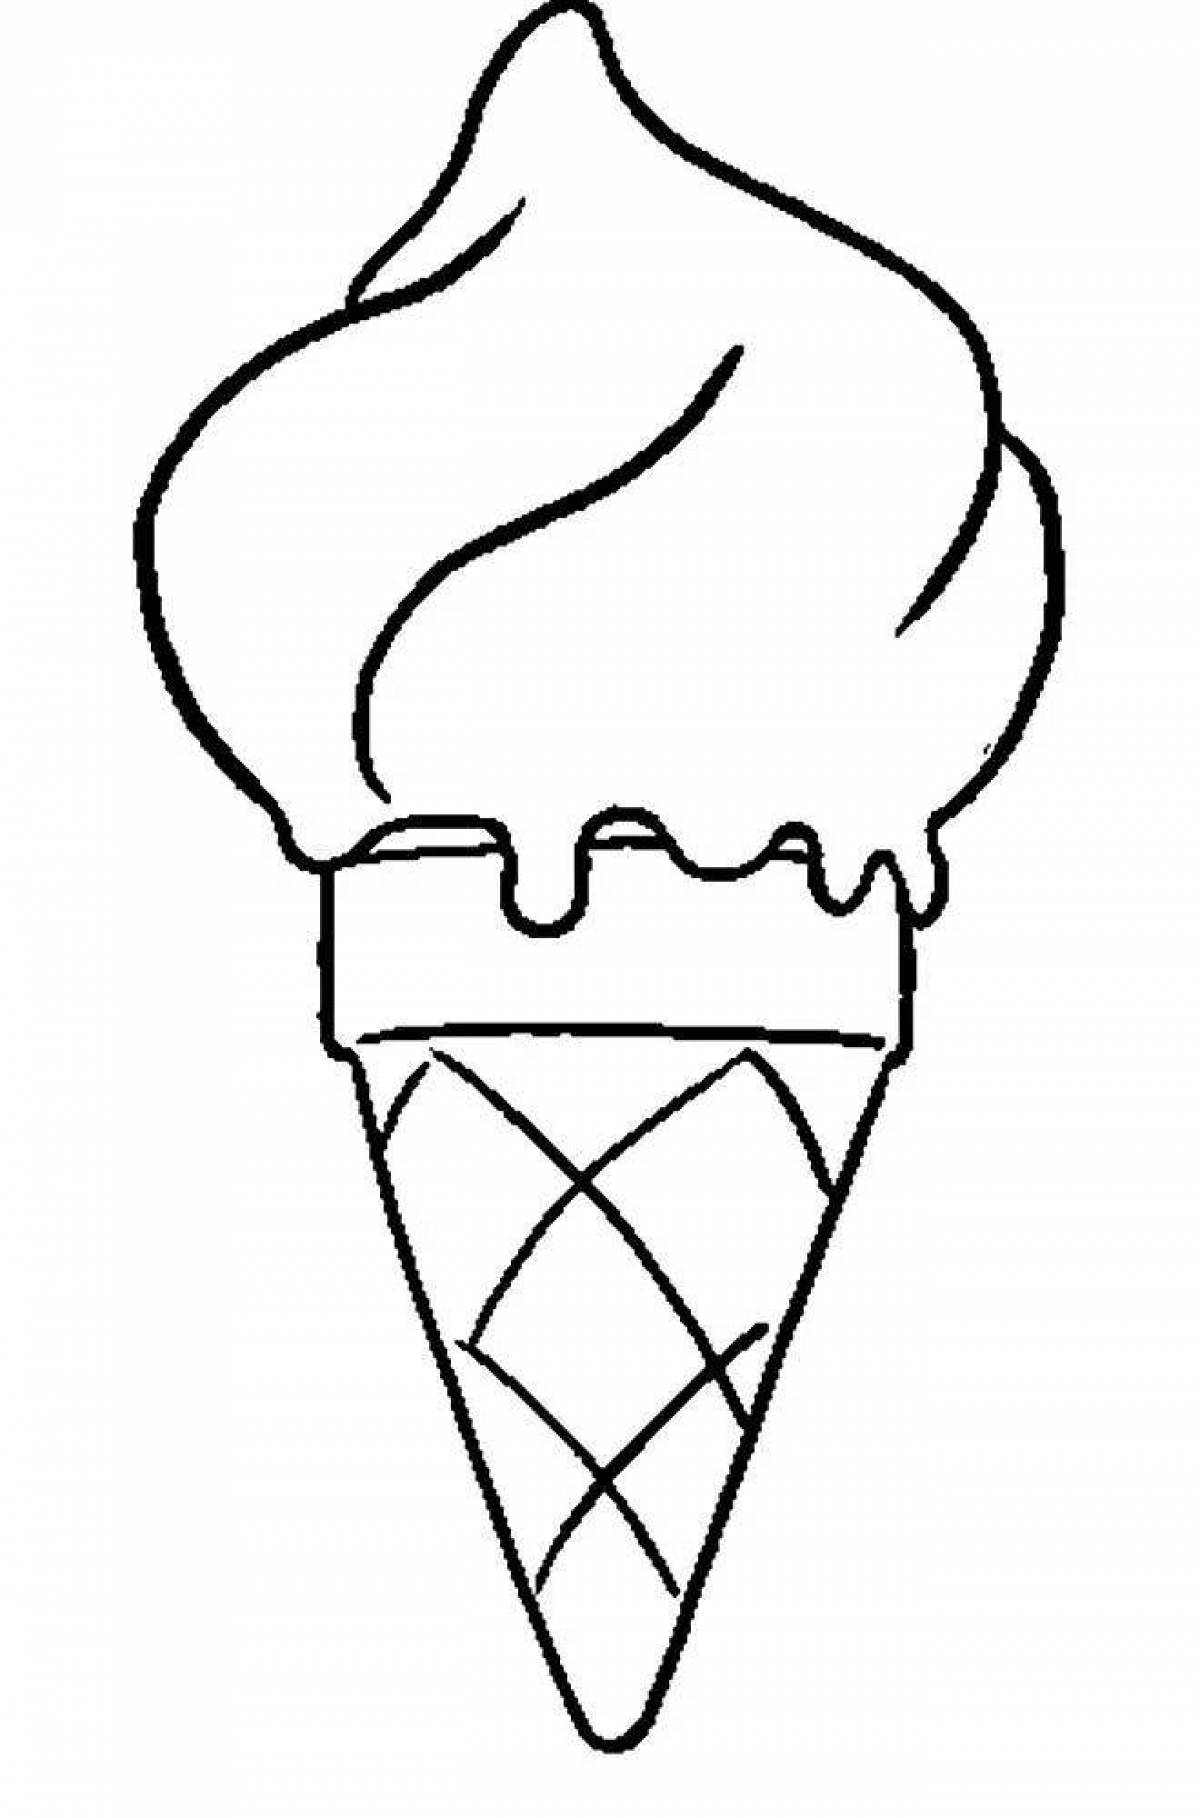 Irresistible ice cream drawing